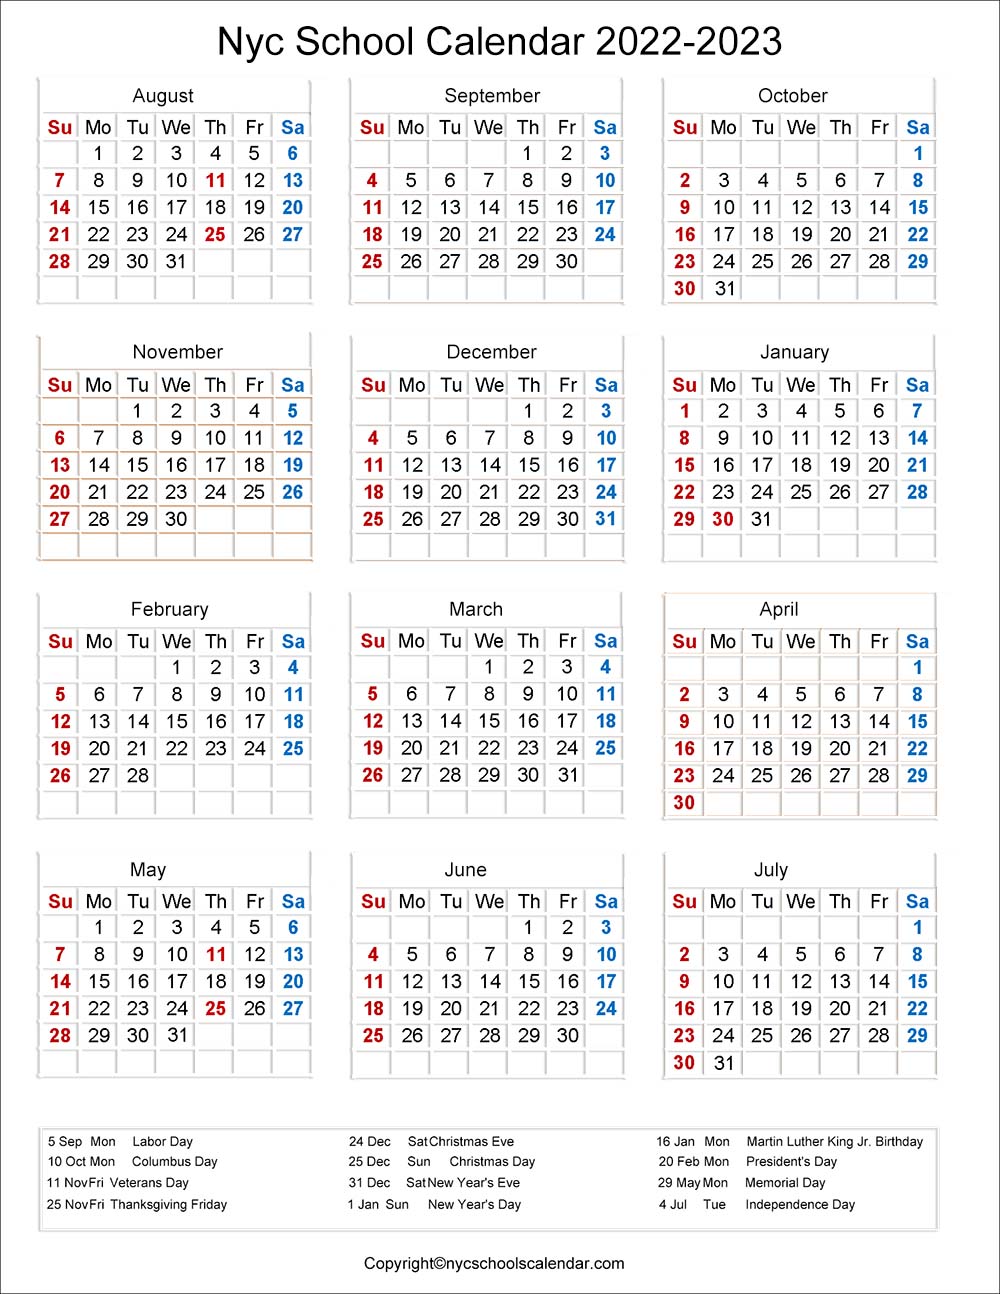 Doe Calendar 2022 23 Nyc ❤️Nyc School Holidays Calendar 2022-2023 ✓